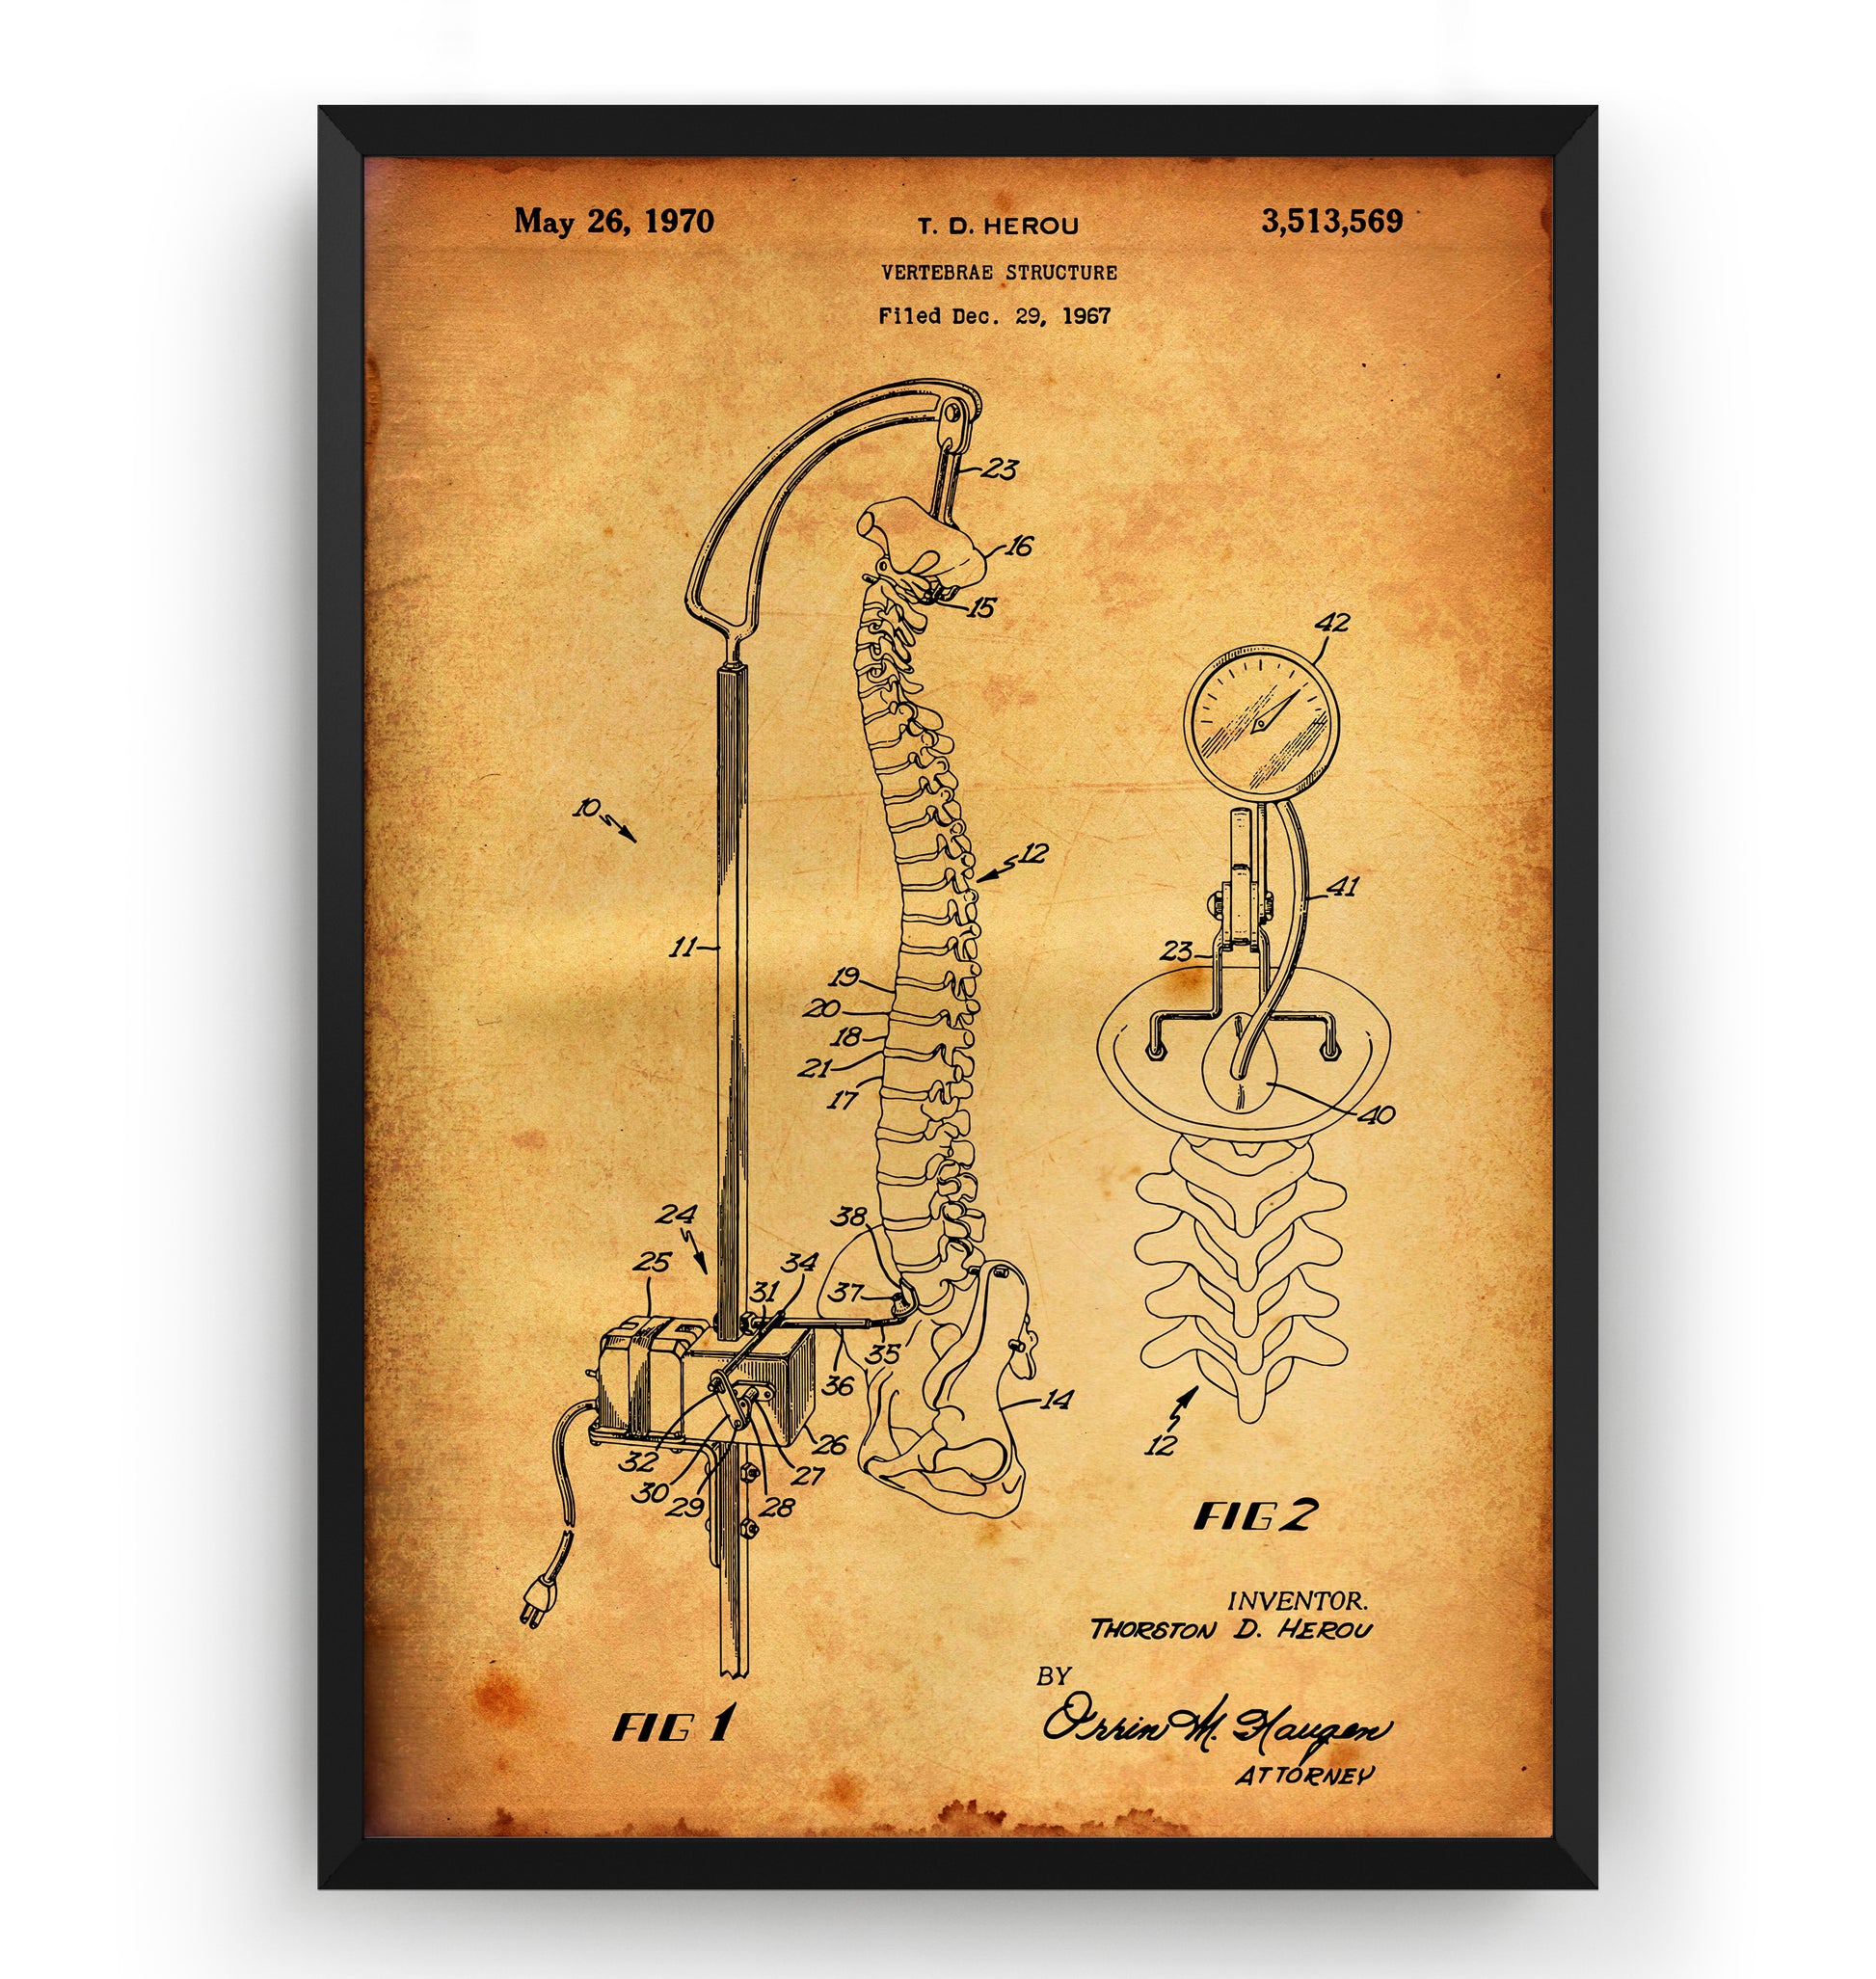 Vertebrae Structure 1970 Patent Print - Magic Posters